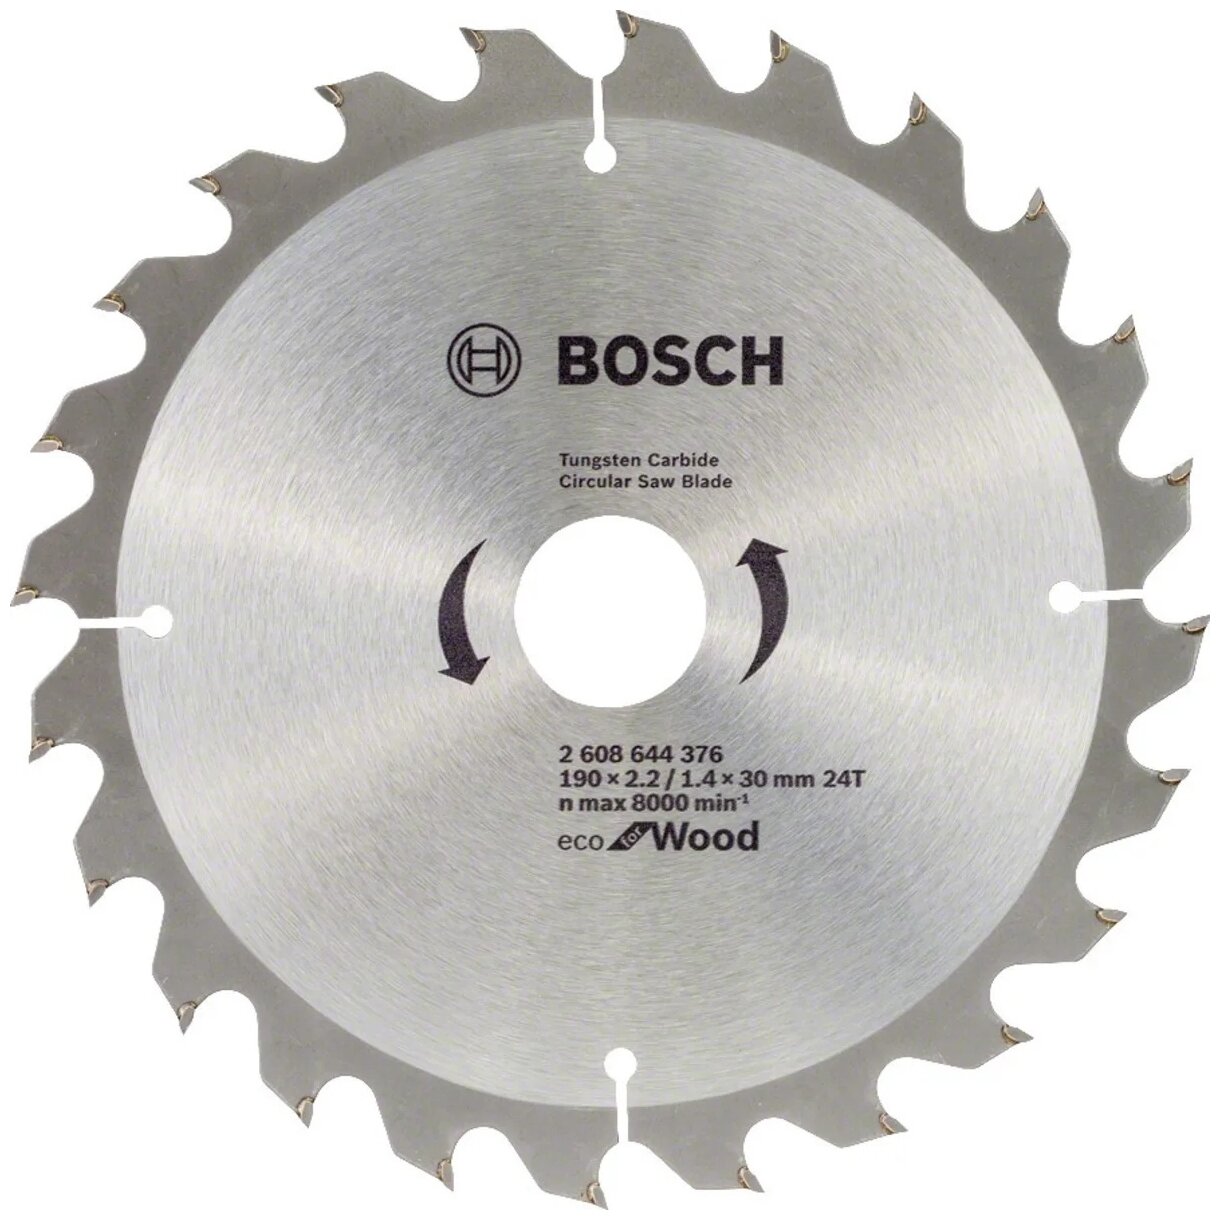   Bosch ECO WO 190x30-24T